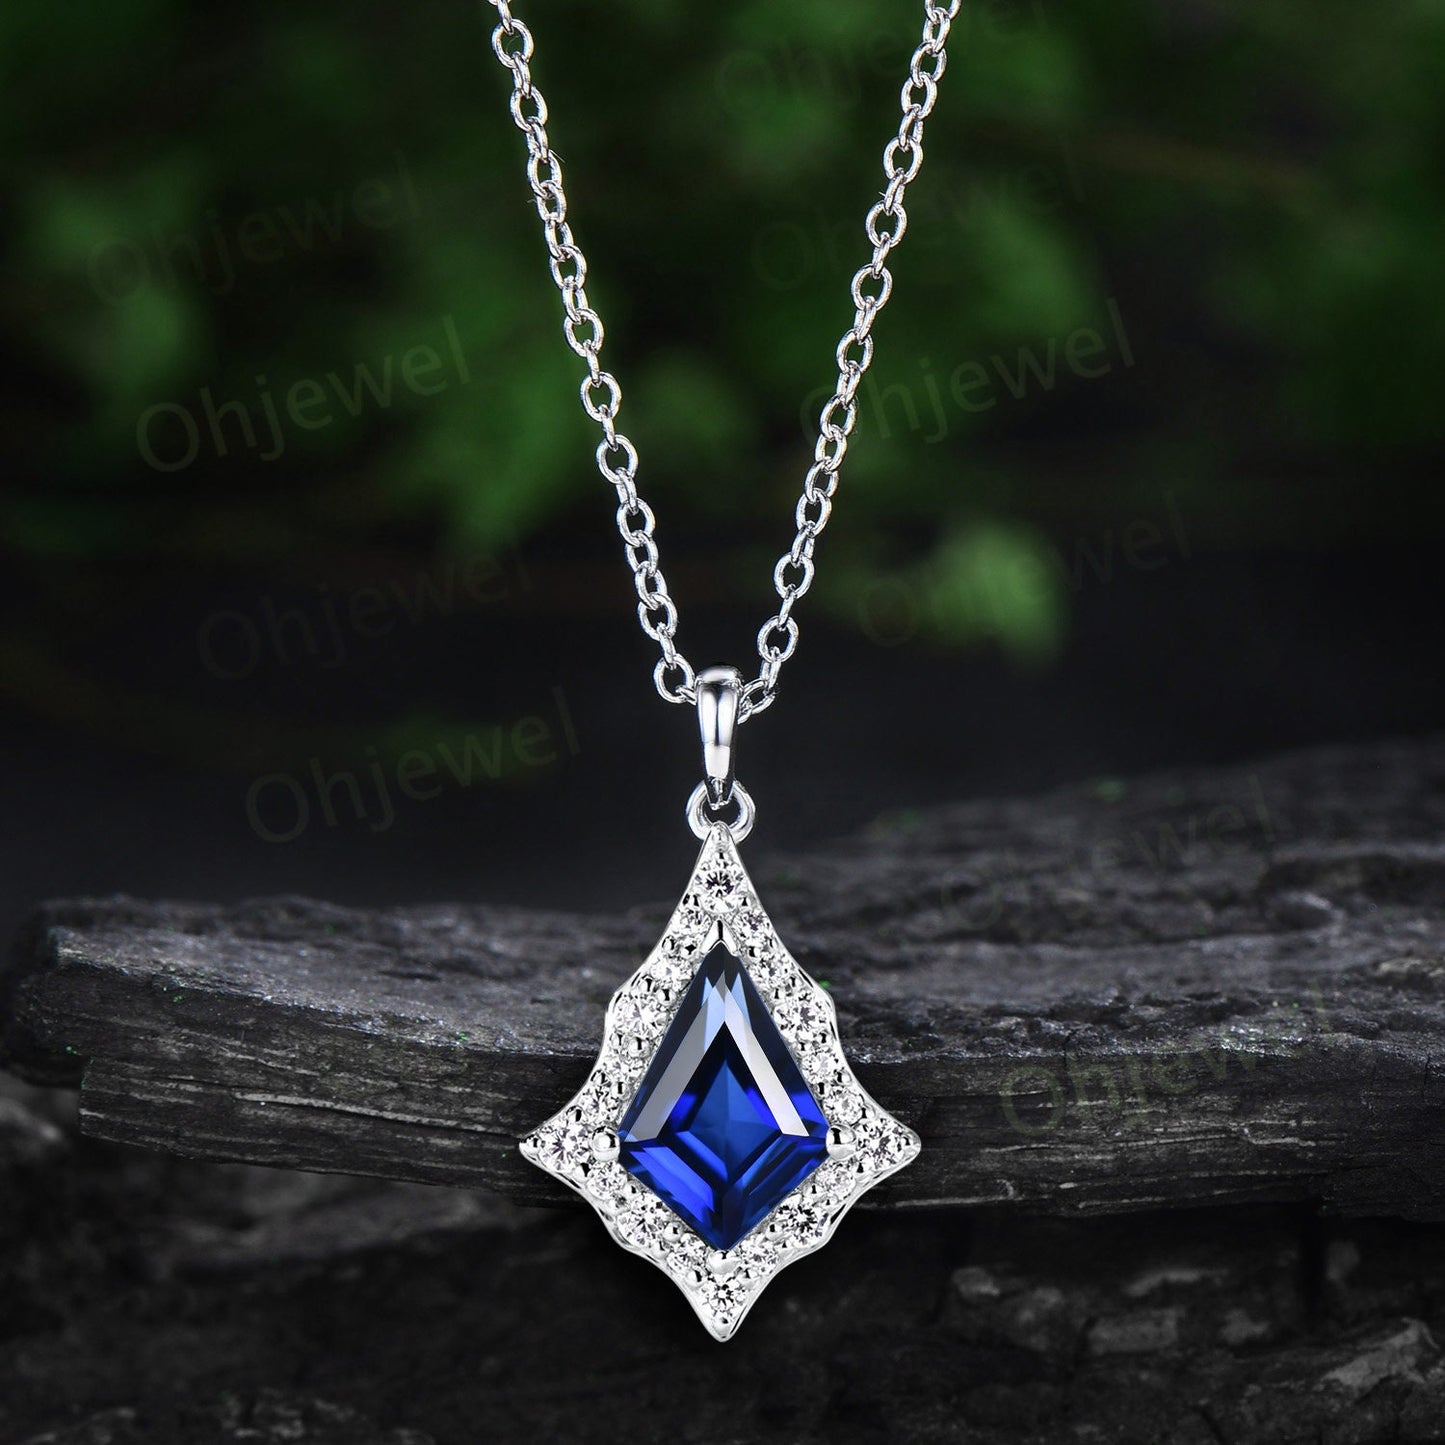 Vintage kite cut blue sapphire necklace rose gold antique unique snowdrift halo diamond necklace Pendant women jewelry anniversary gift